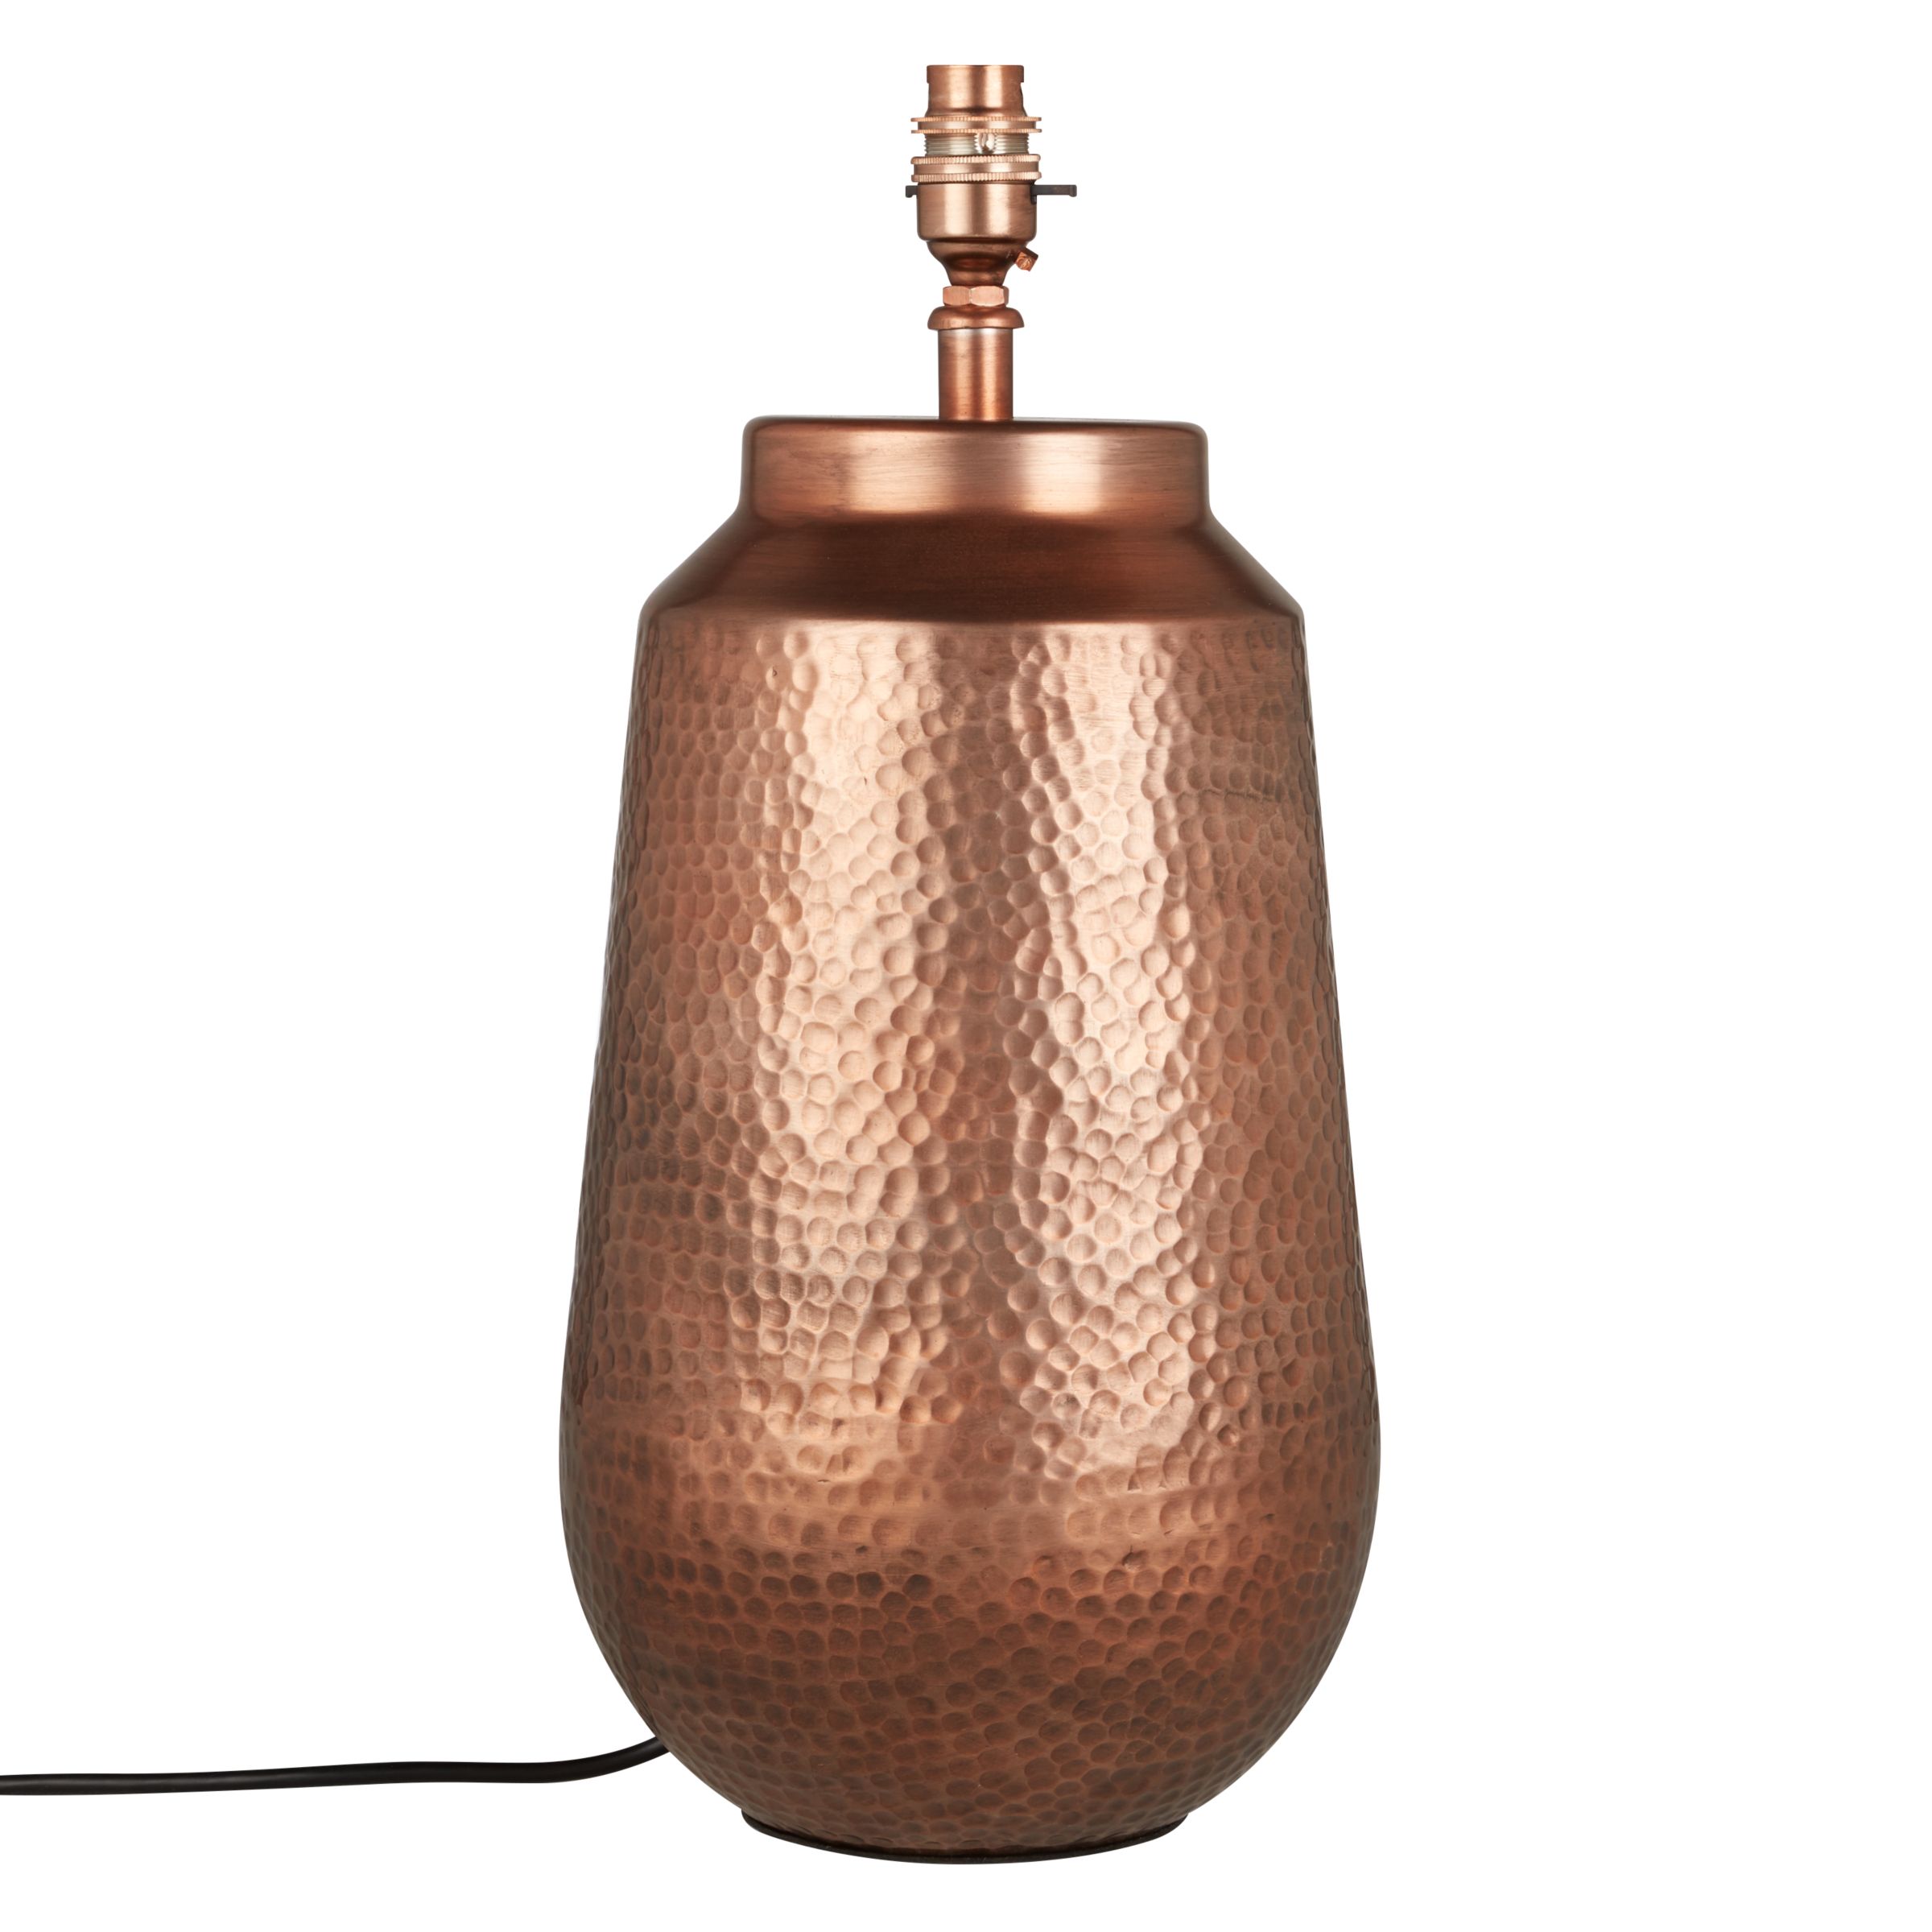 John Lewis Partners Rohan Hammered, Vintage Hammered Copper Table Lamp